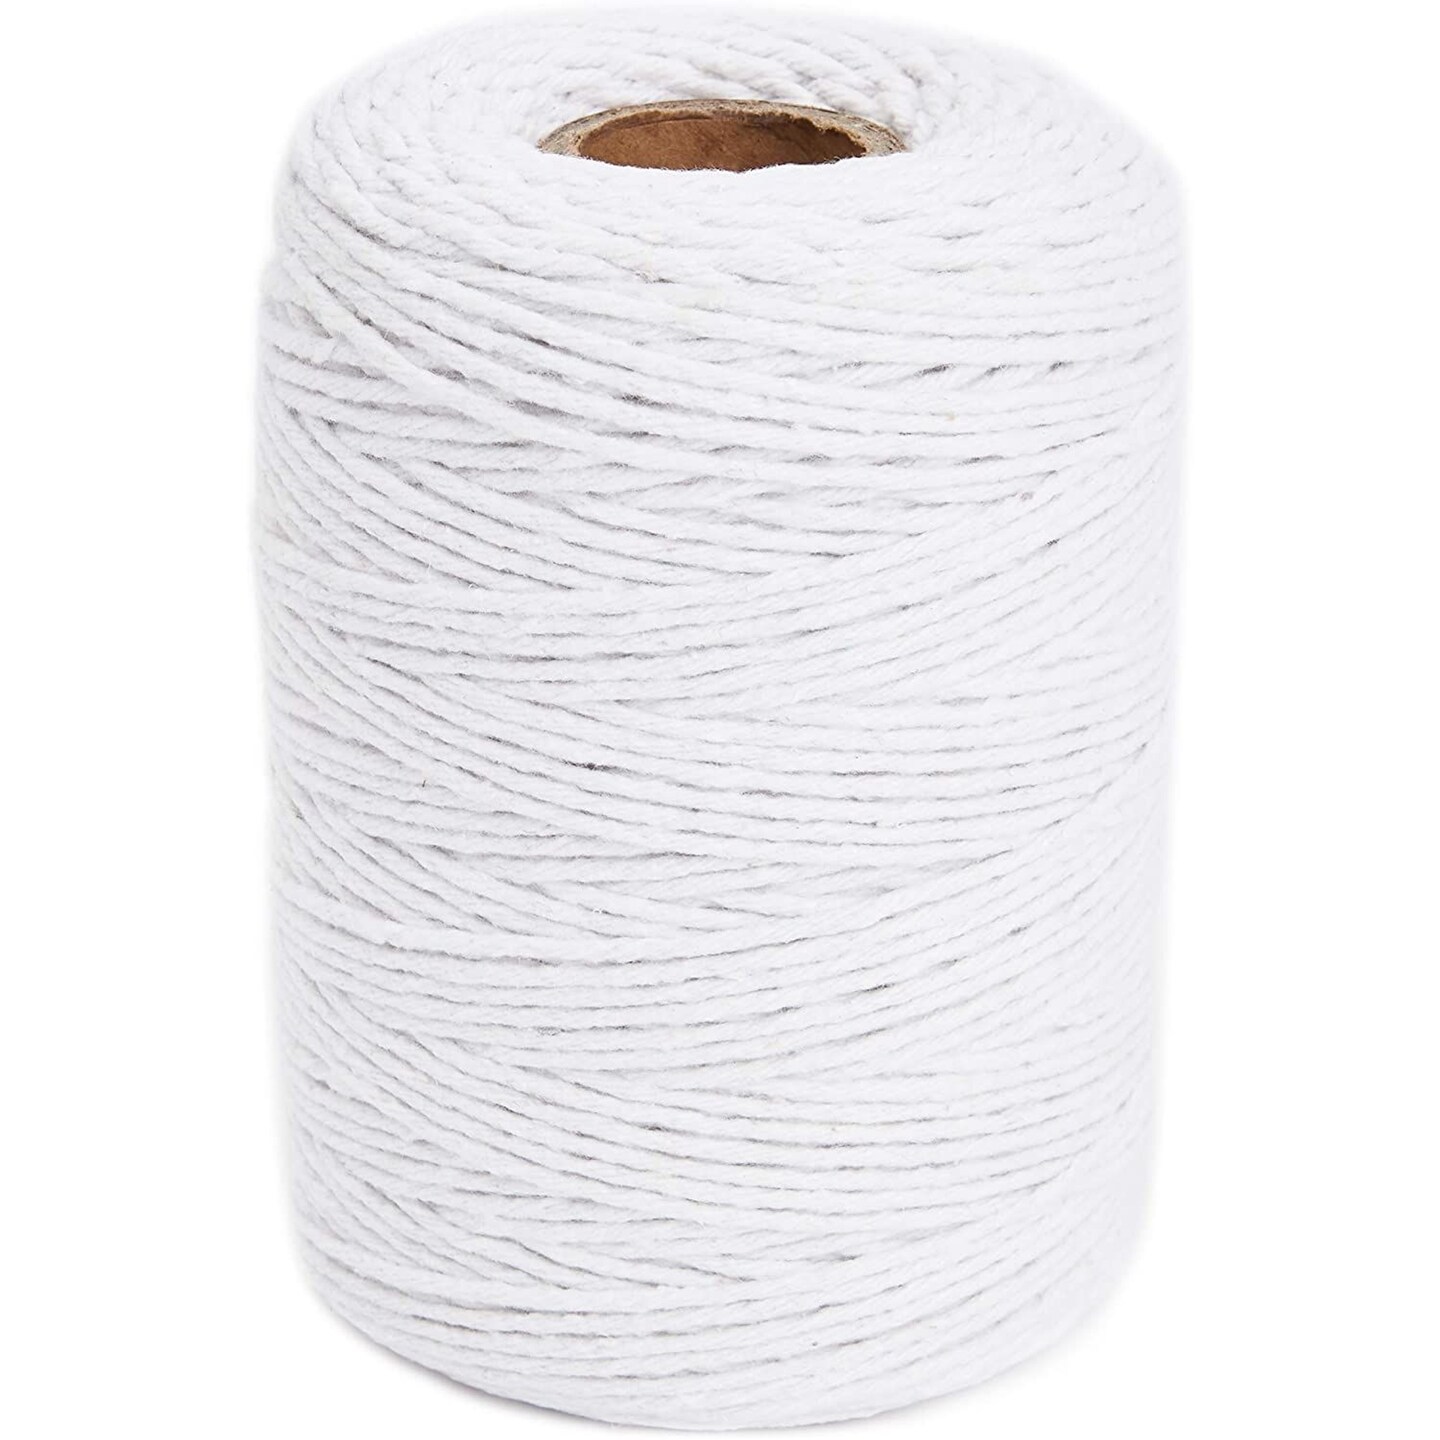 Pepperell Cotton Macramé Cord - White, 2 mm, 100 ft